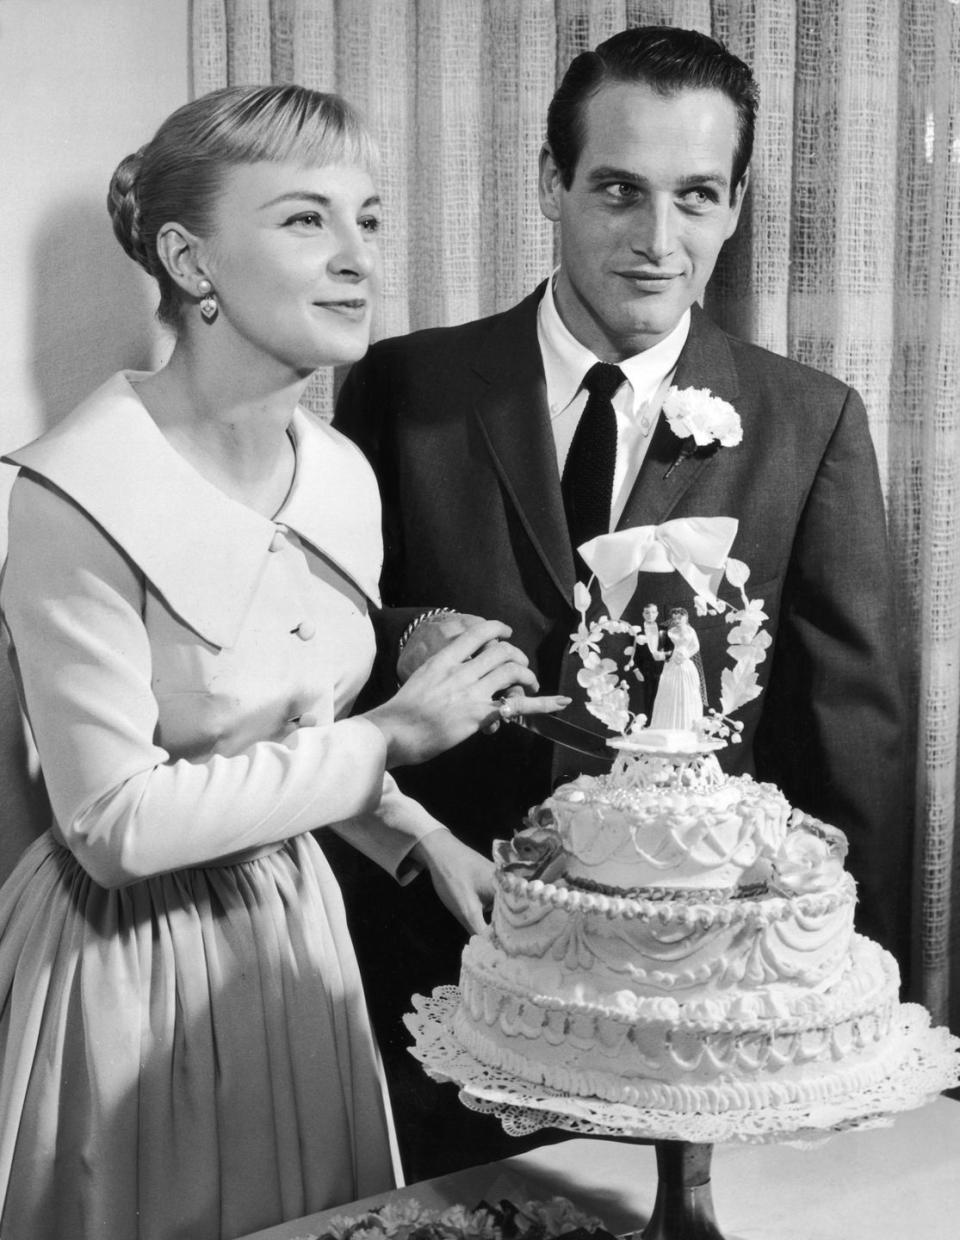 1958: Paul Newman turns his on-screen romance into a lifelong real love